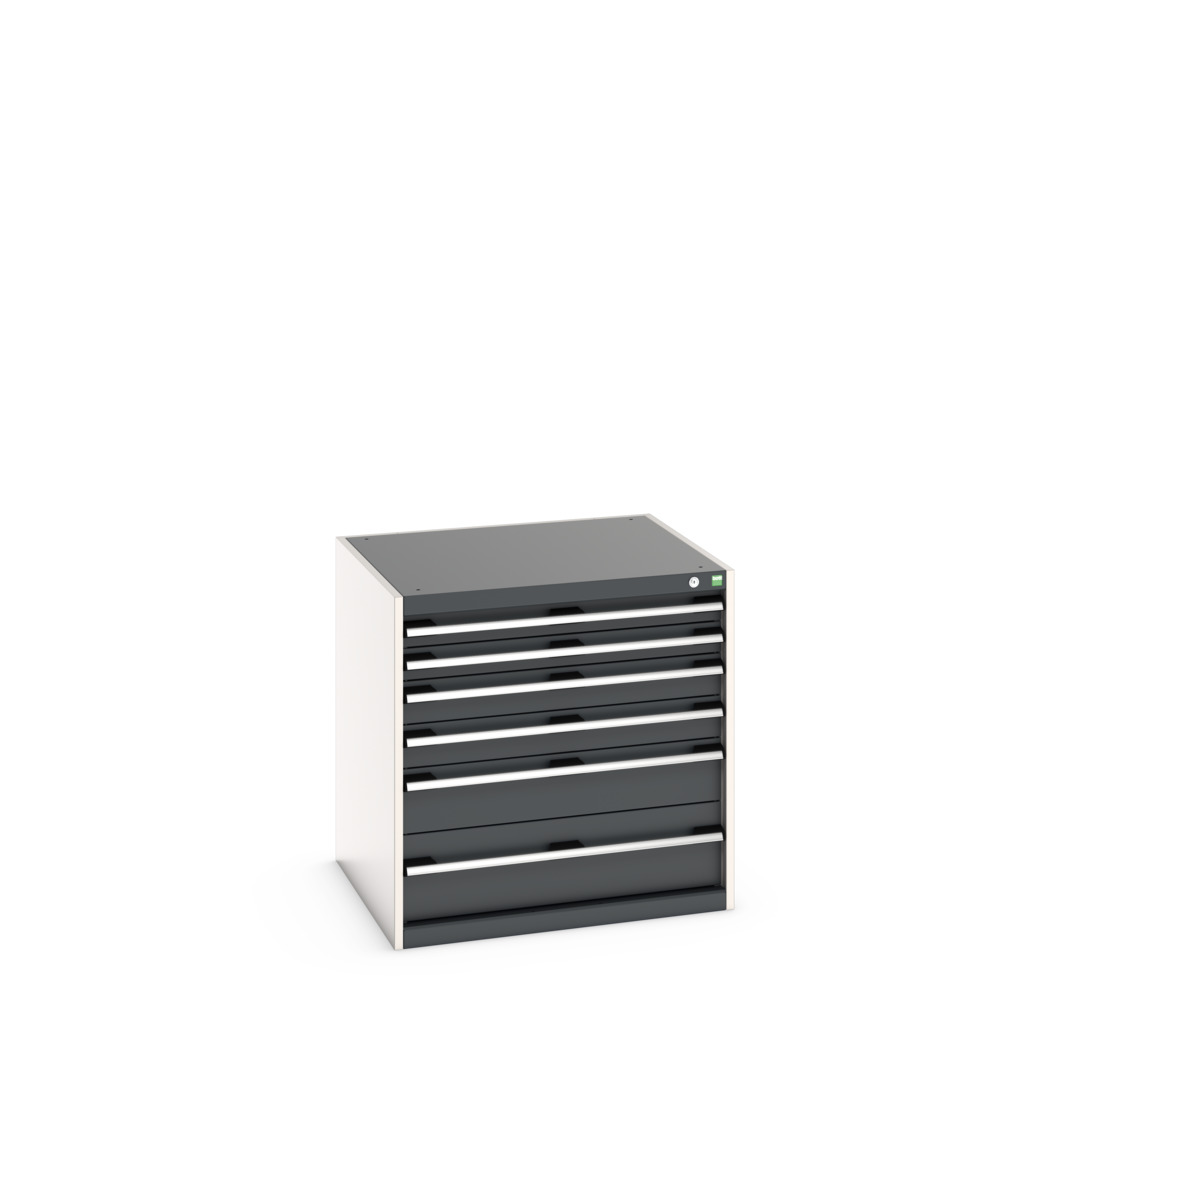 40028087. - cubio drawer cabinet